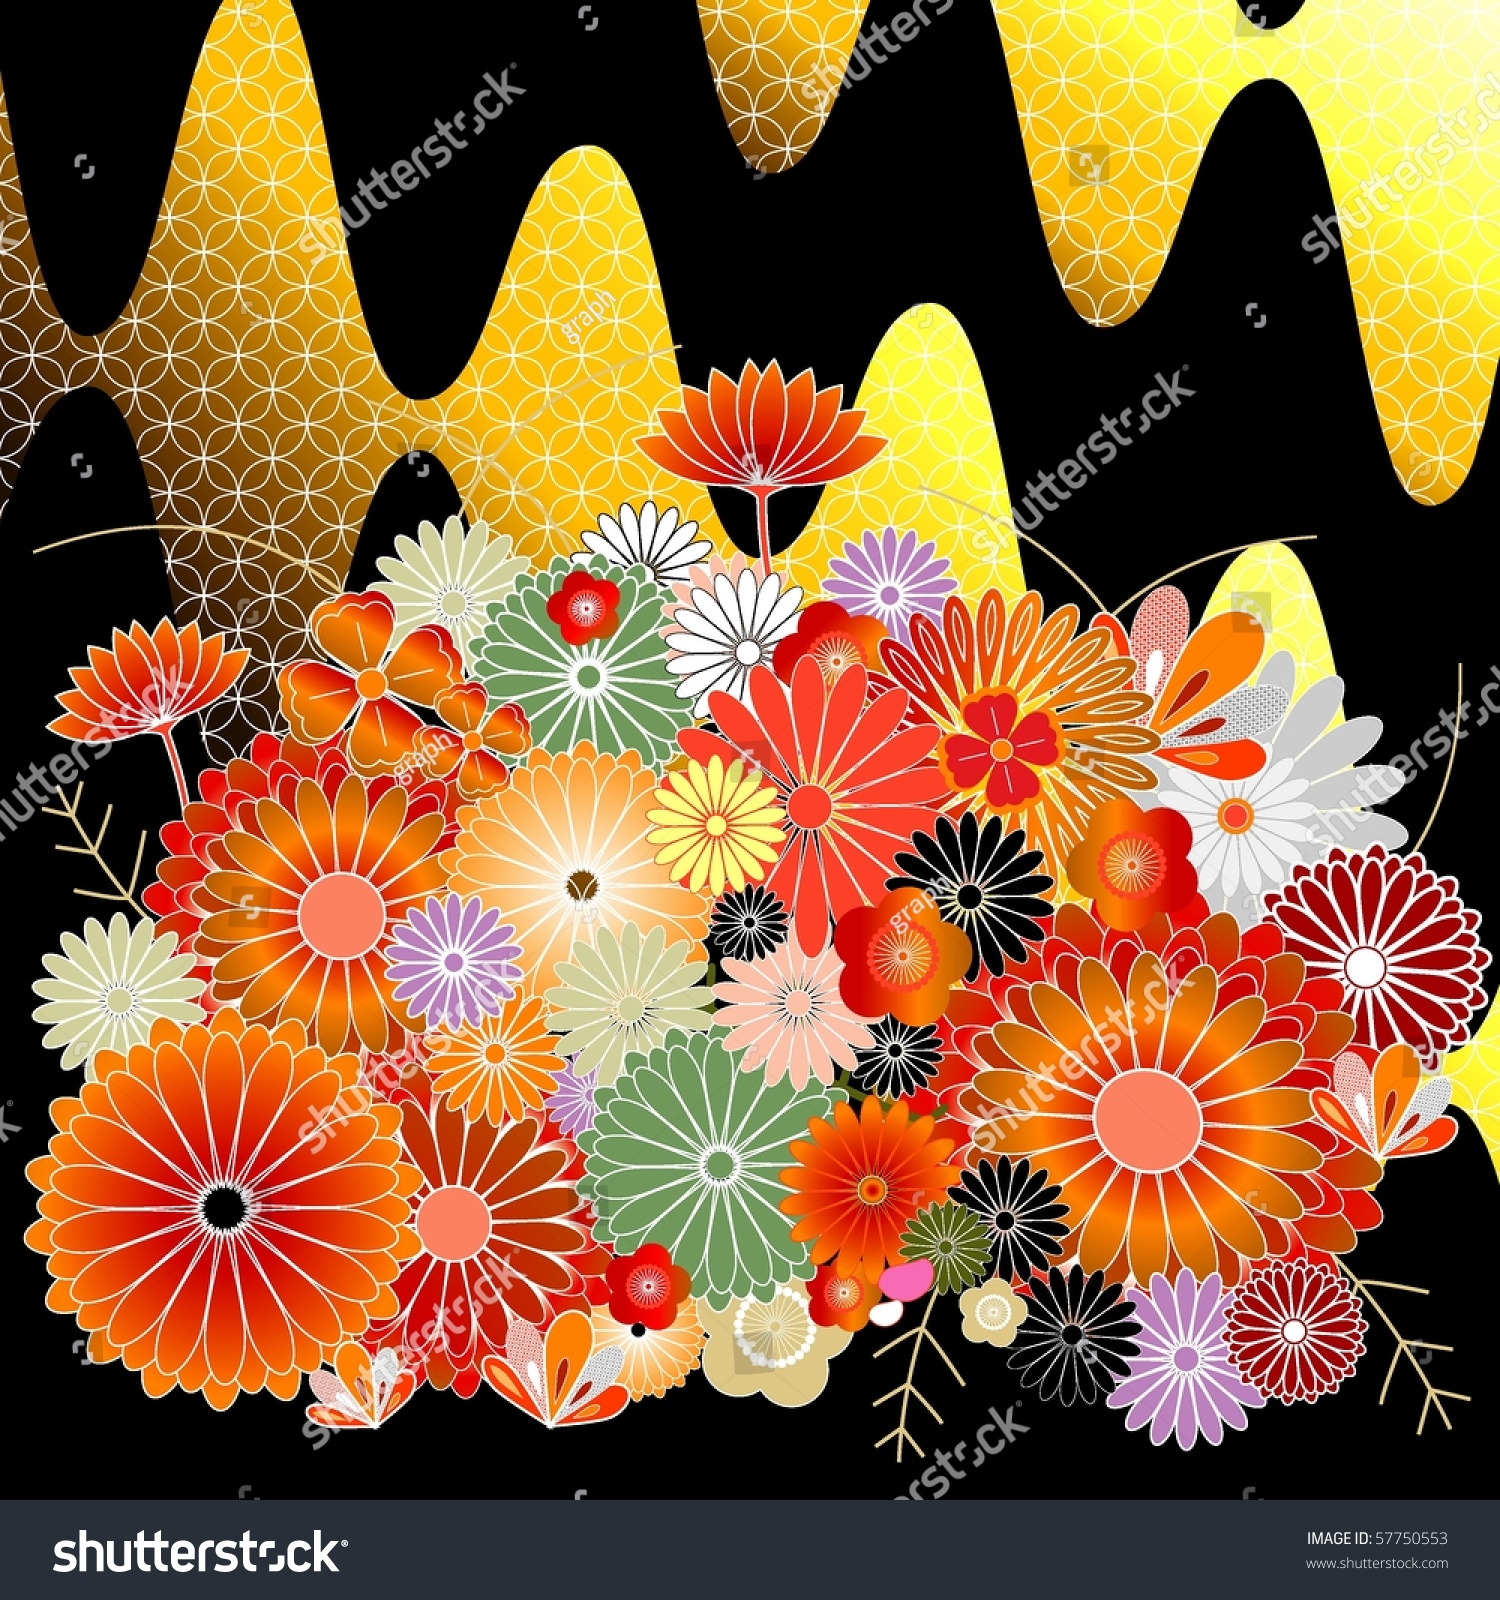 Background Illustration Of Japanese Pattern - 57750553 : Shutterstock